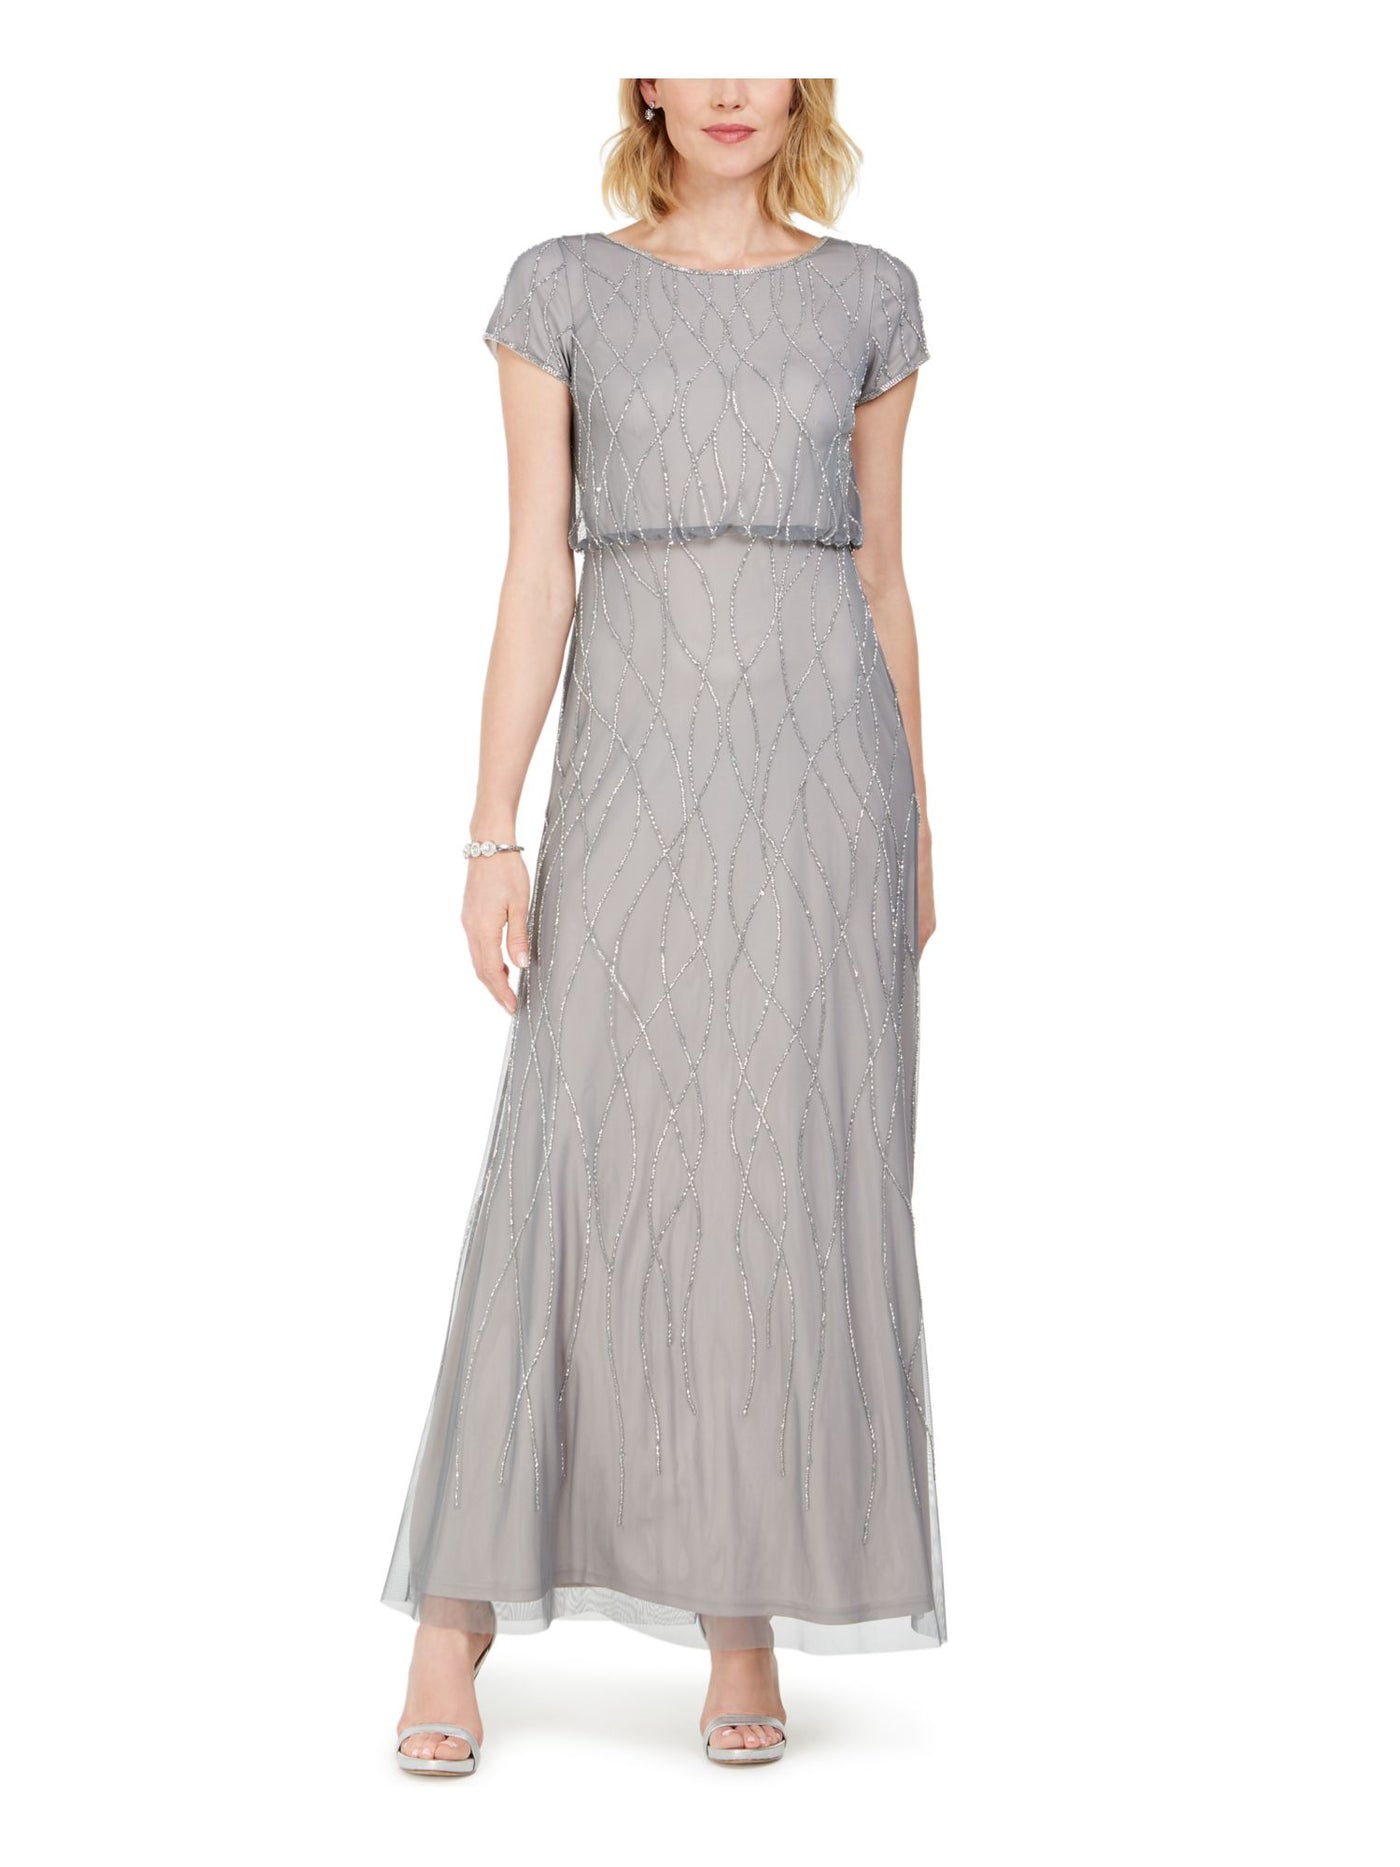 ADRIANNA PAPELL Womens Gray Beaded Sequined Short Sleeve Jewel Neck Full-Length Evening Blouson Dress 4